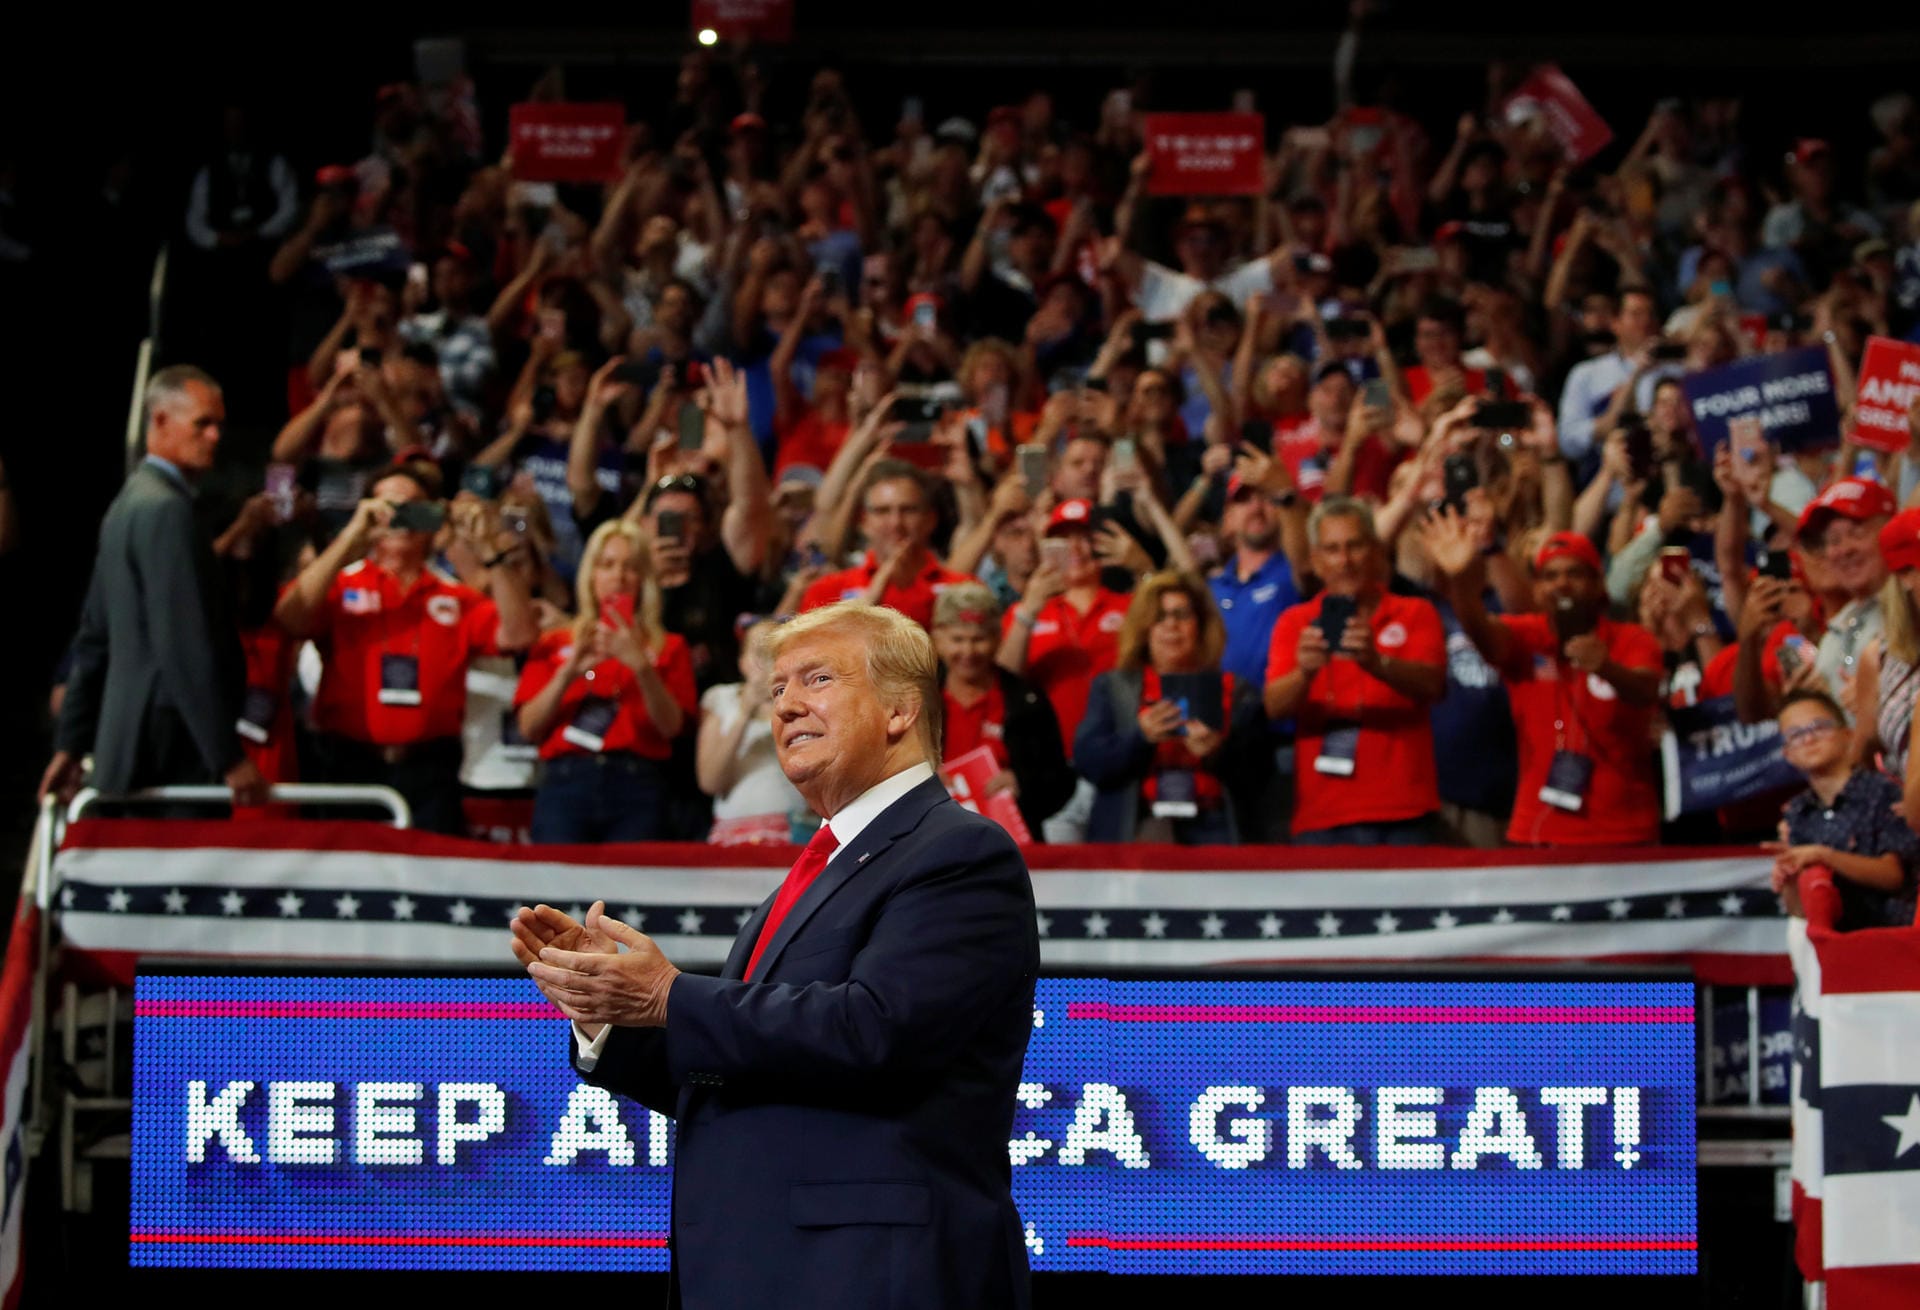 Trumps Wahlkampfmotto: "Keep America Great!"